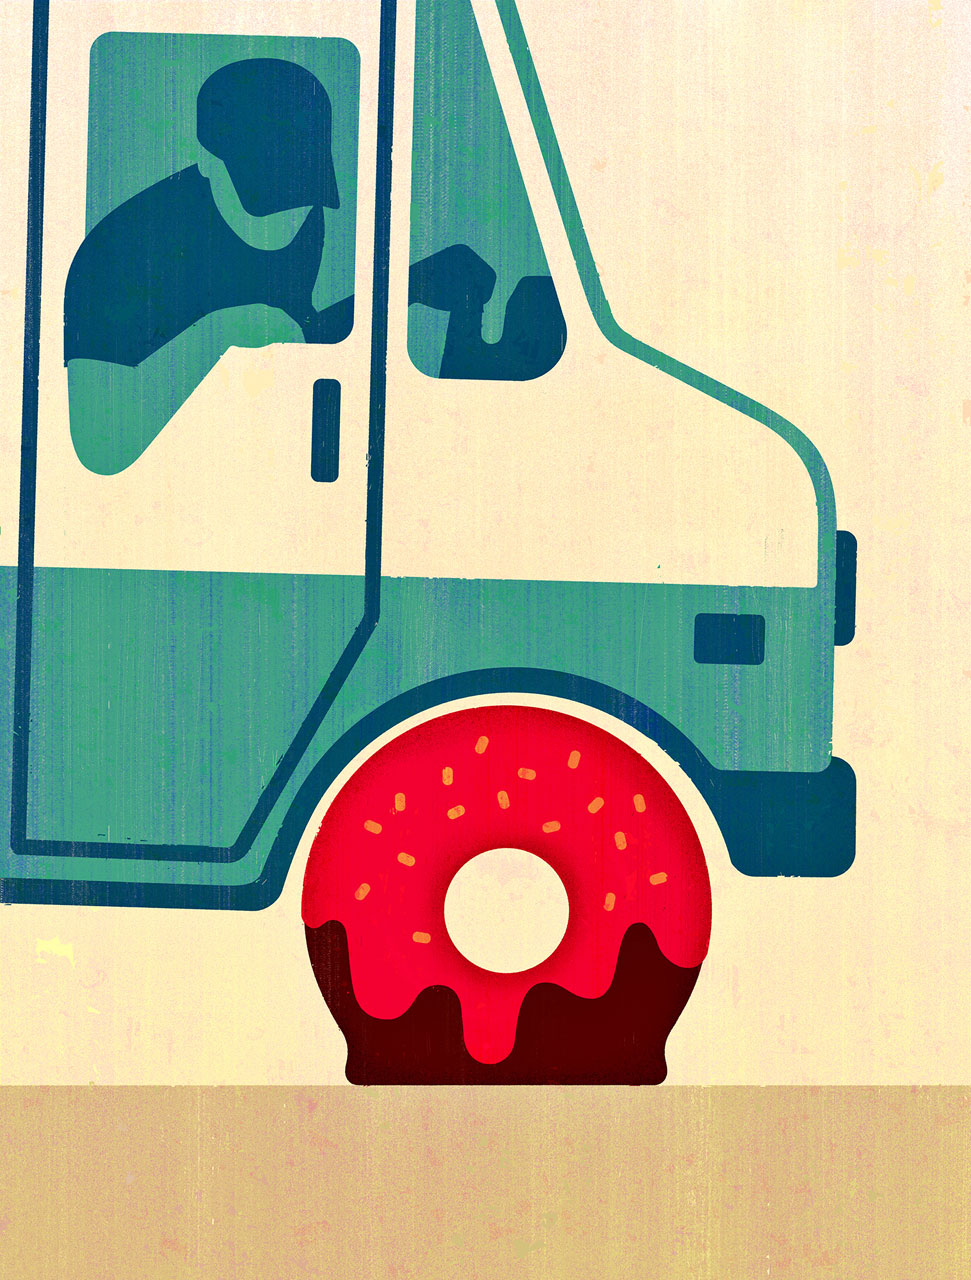 Donuts Truck